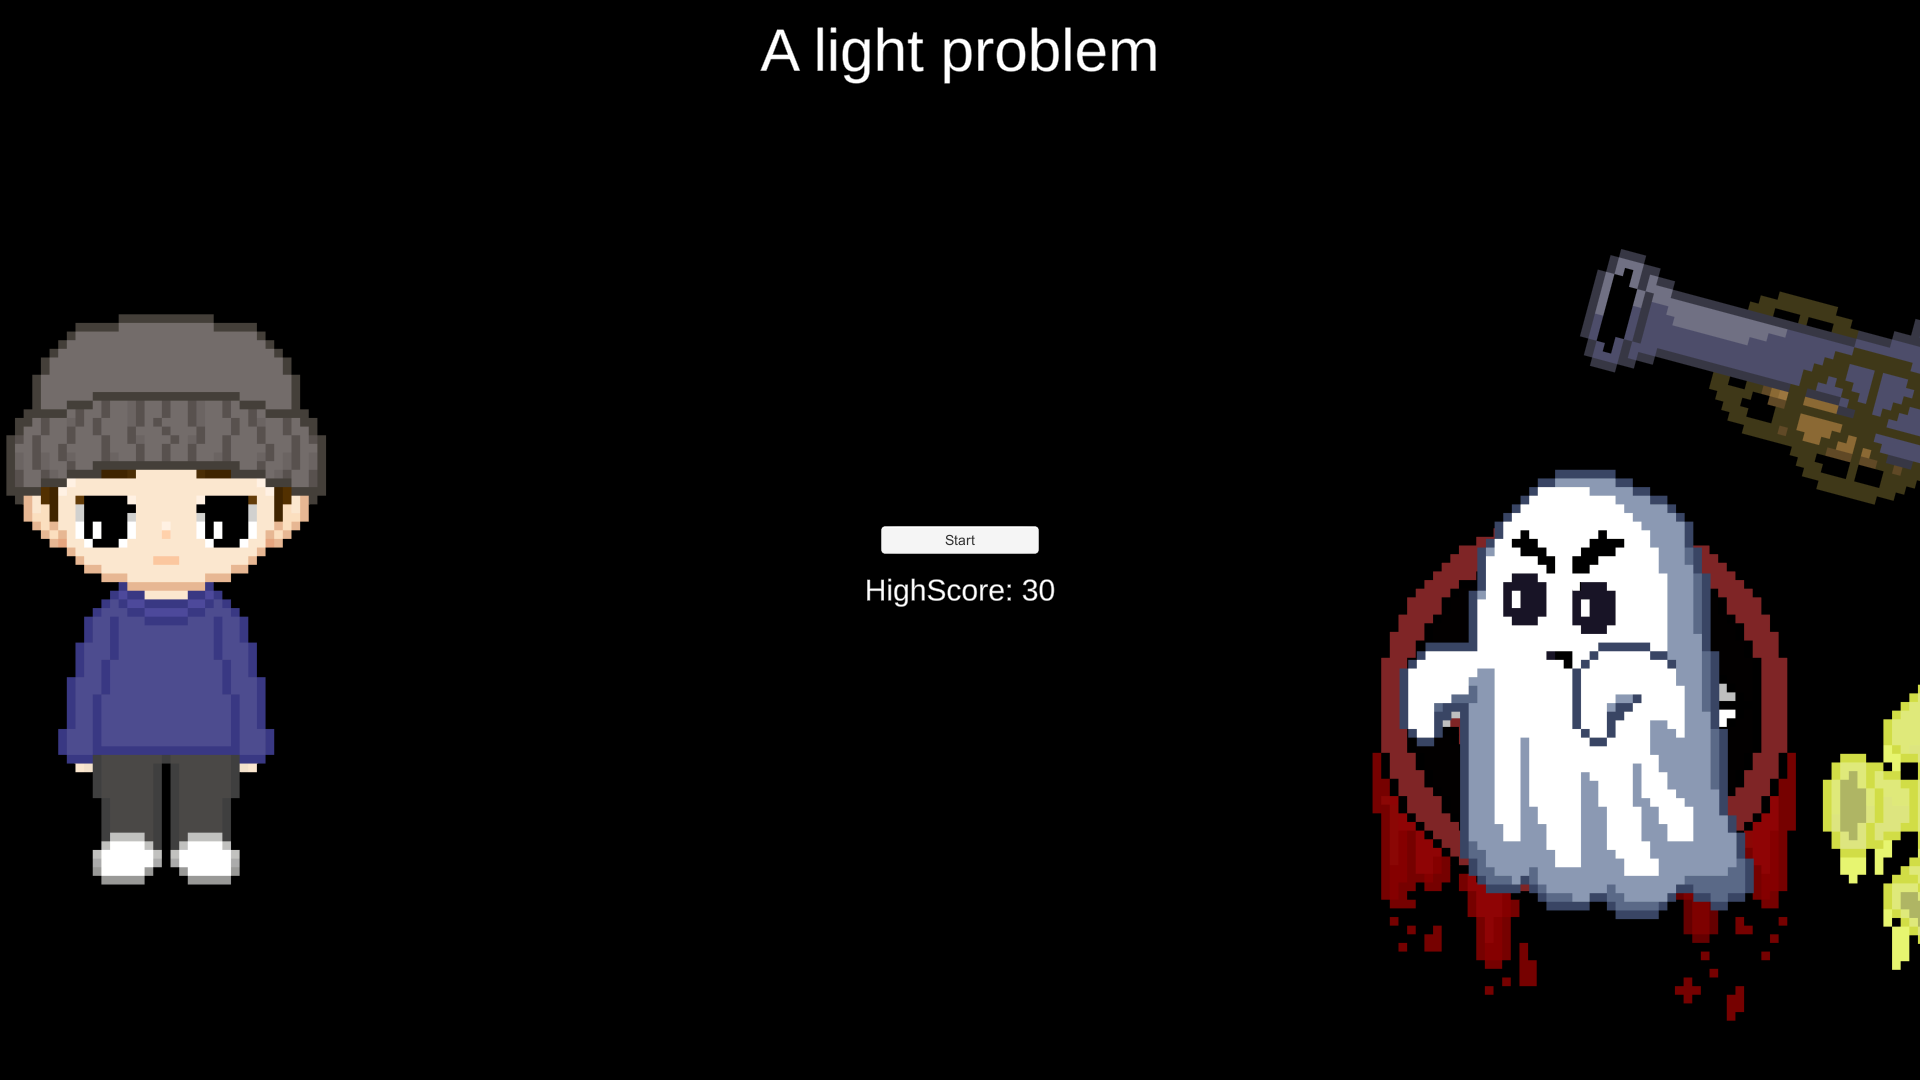 A light problem